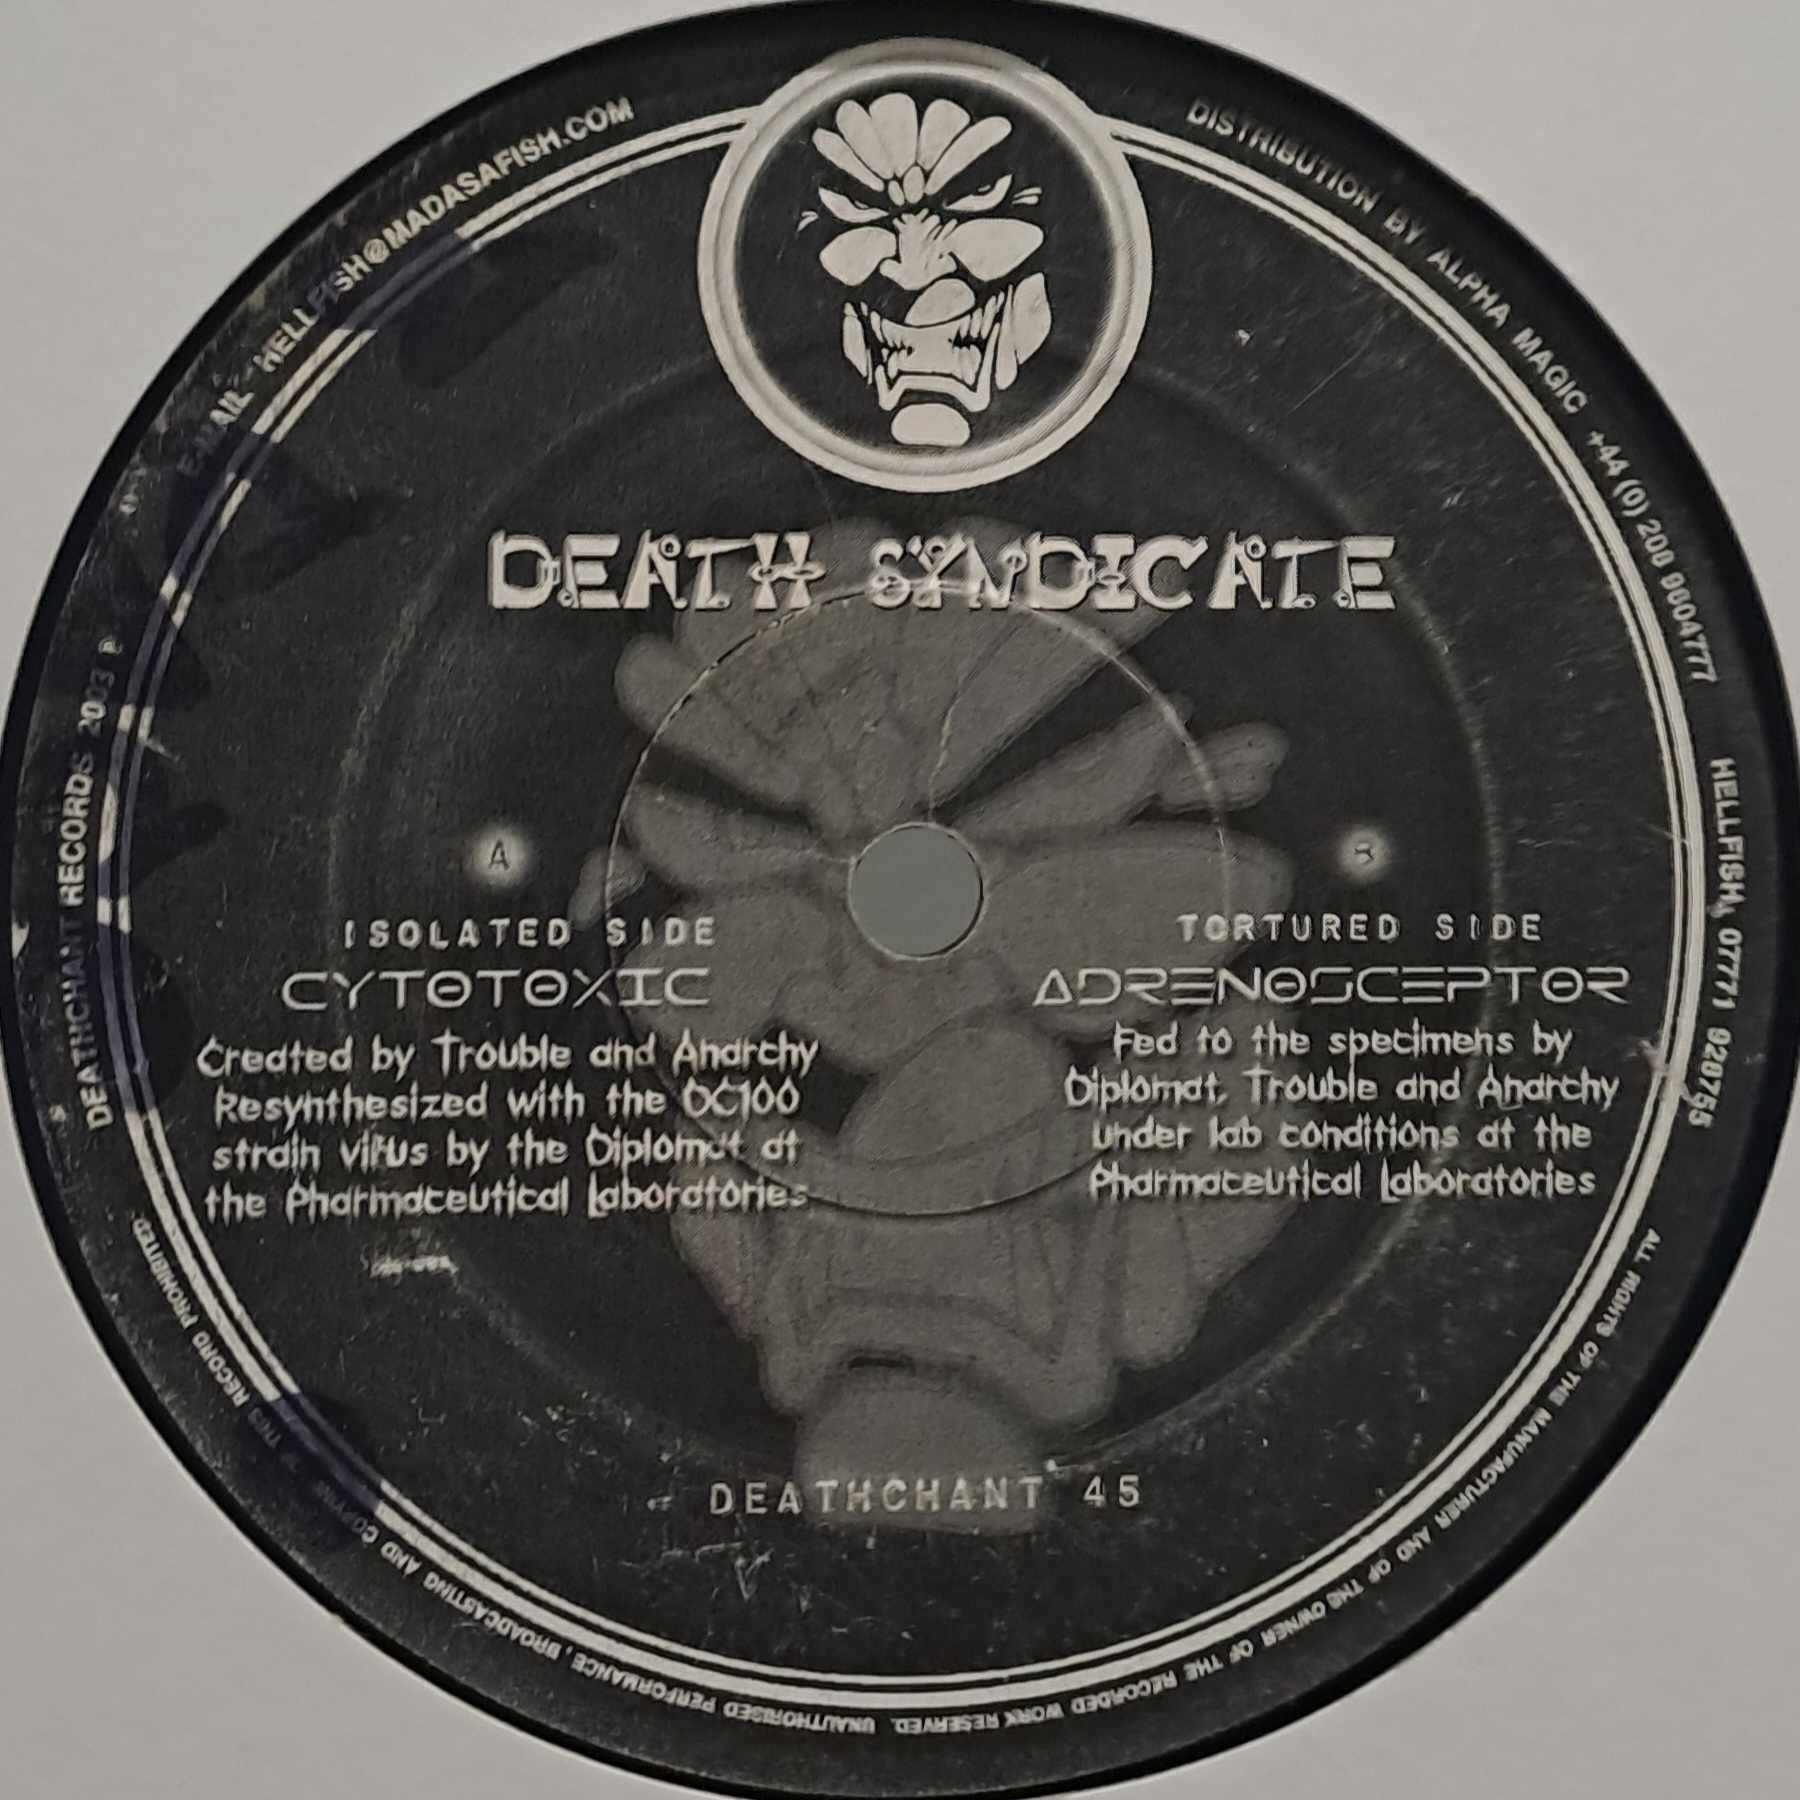 Deathchant 45 - vinyle hardcore